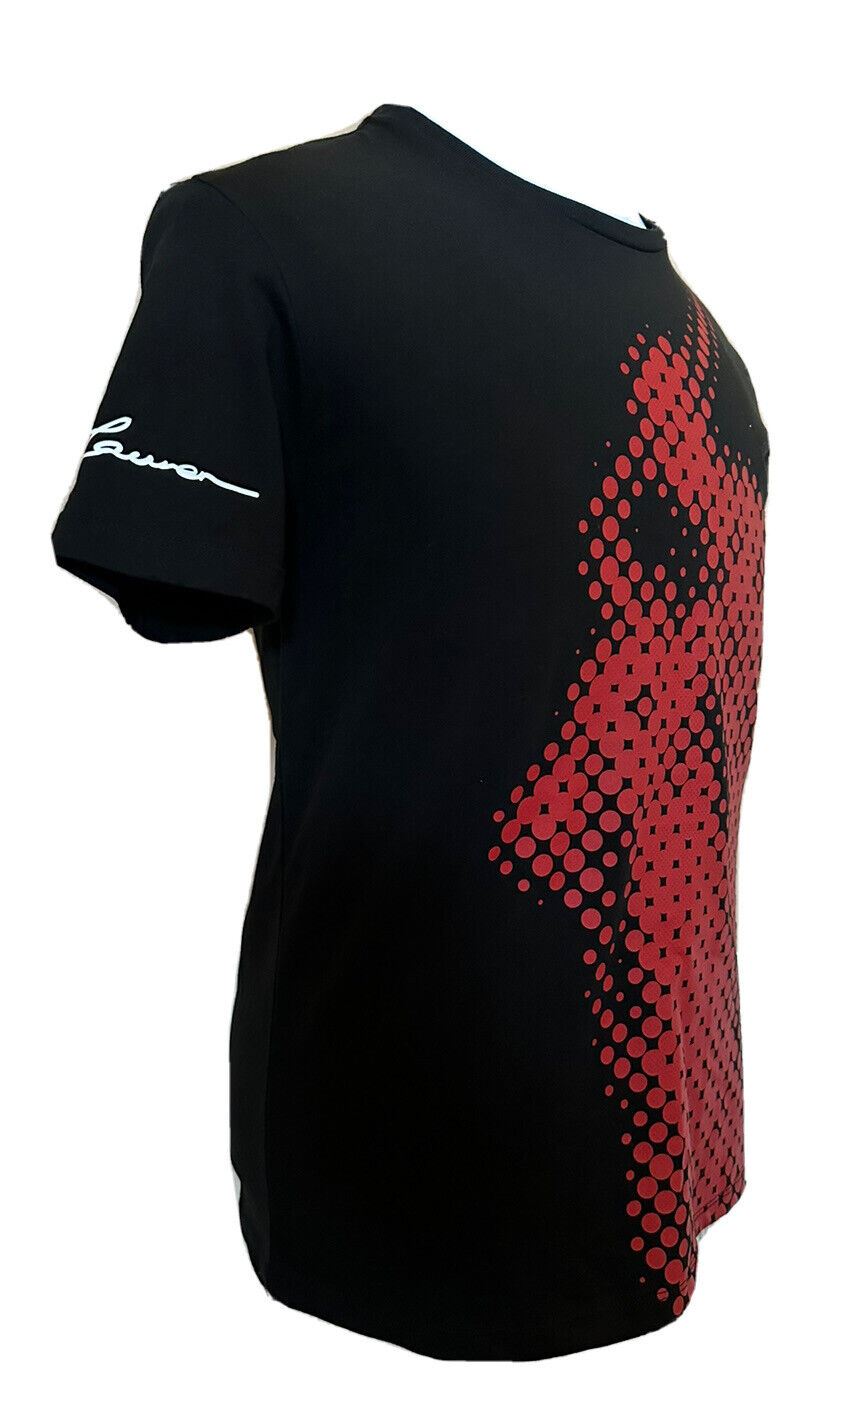 NWT $65 Polo Ralph Lauren Short Sleeve Logo T-shirt Black L